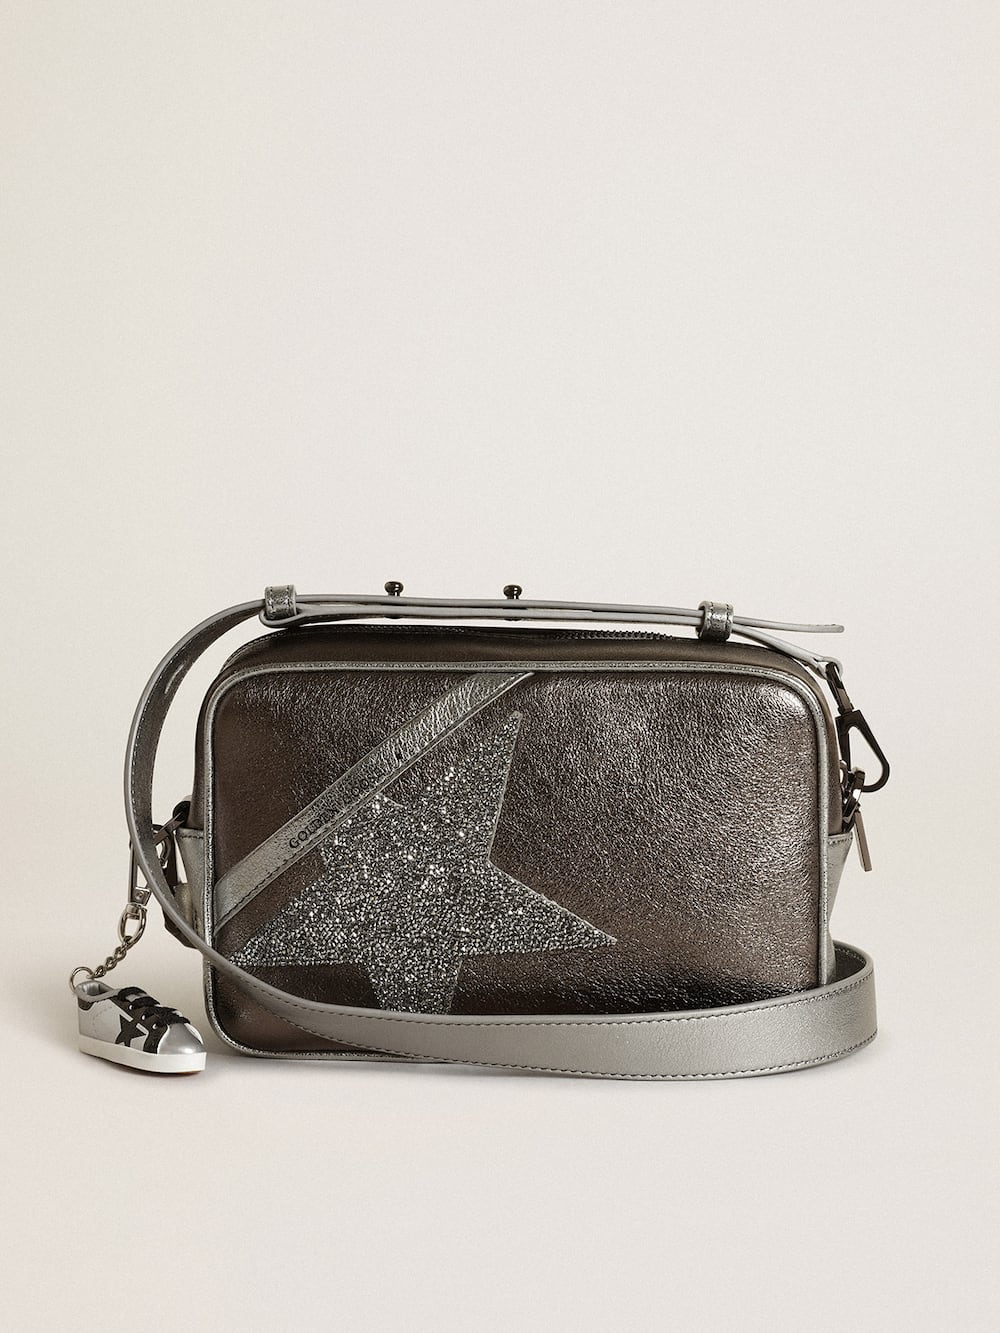 Golden Goose - Star Bag in pelle argento con stella in cristalli Swarovski in 